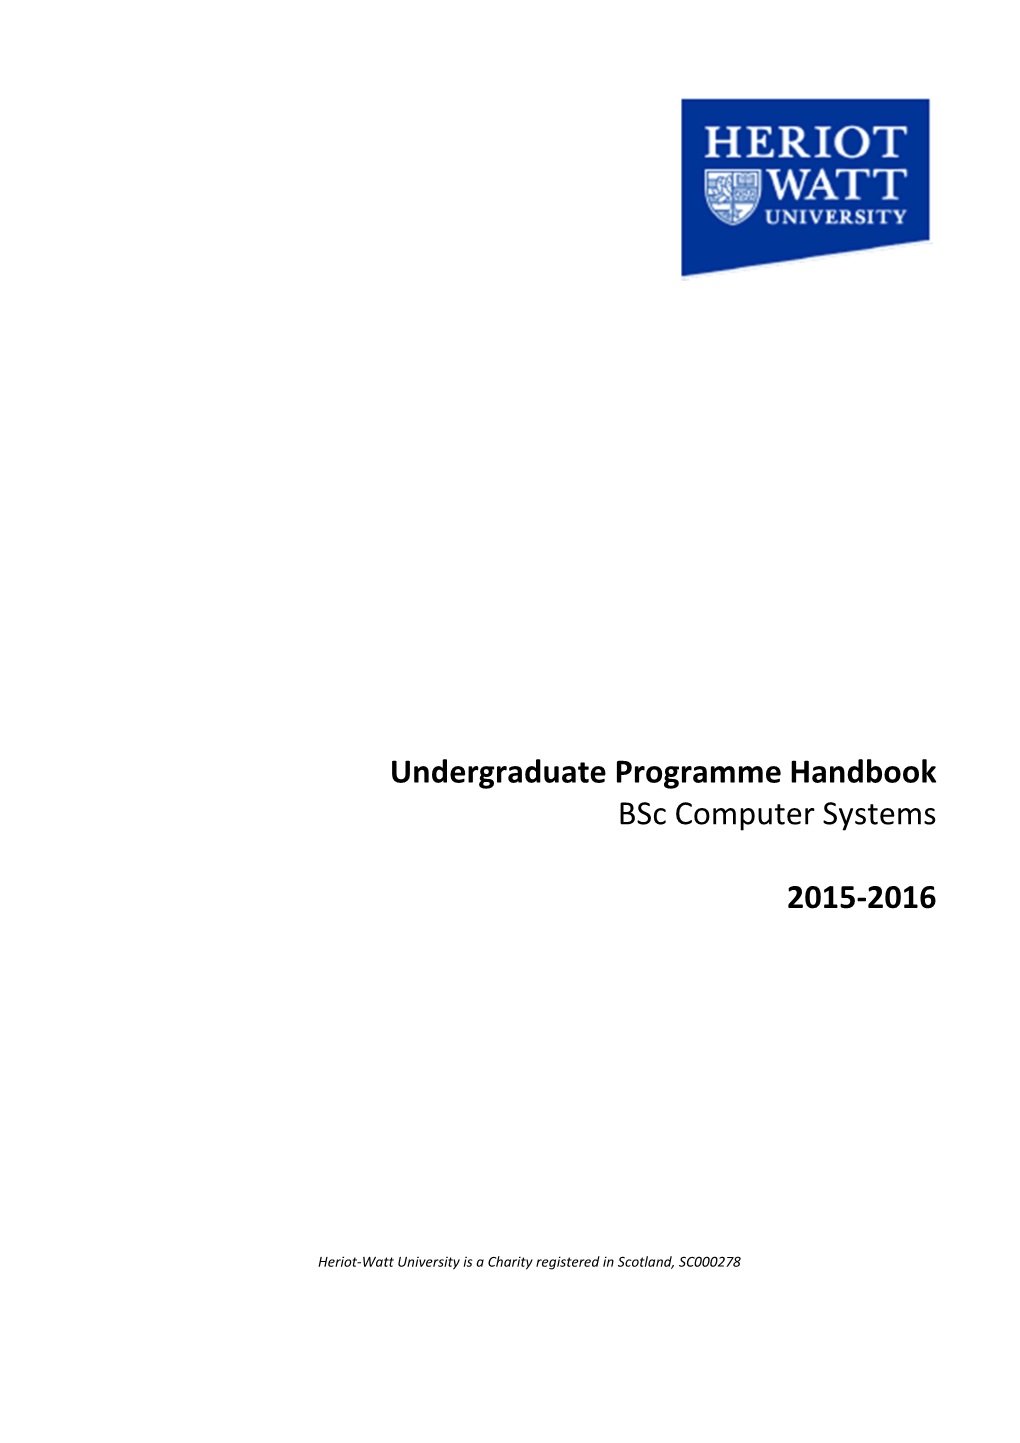 Undergraduate Programme Handbook Bsc Computer Systems